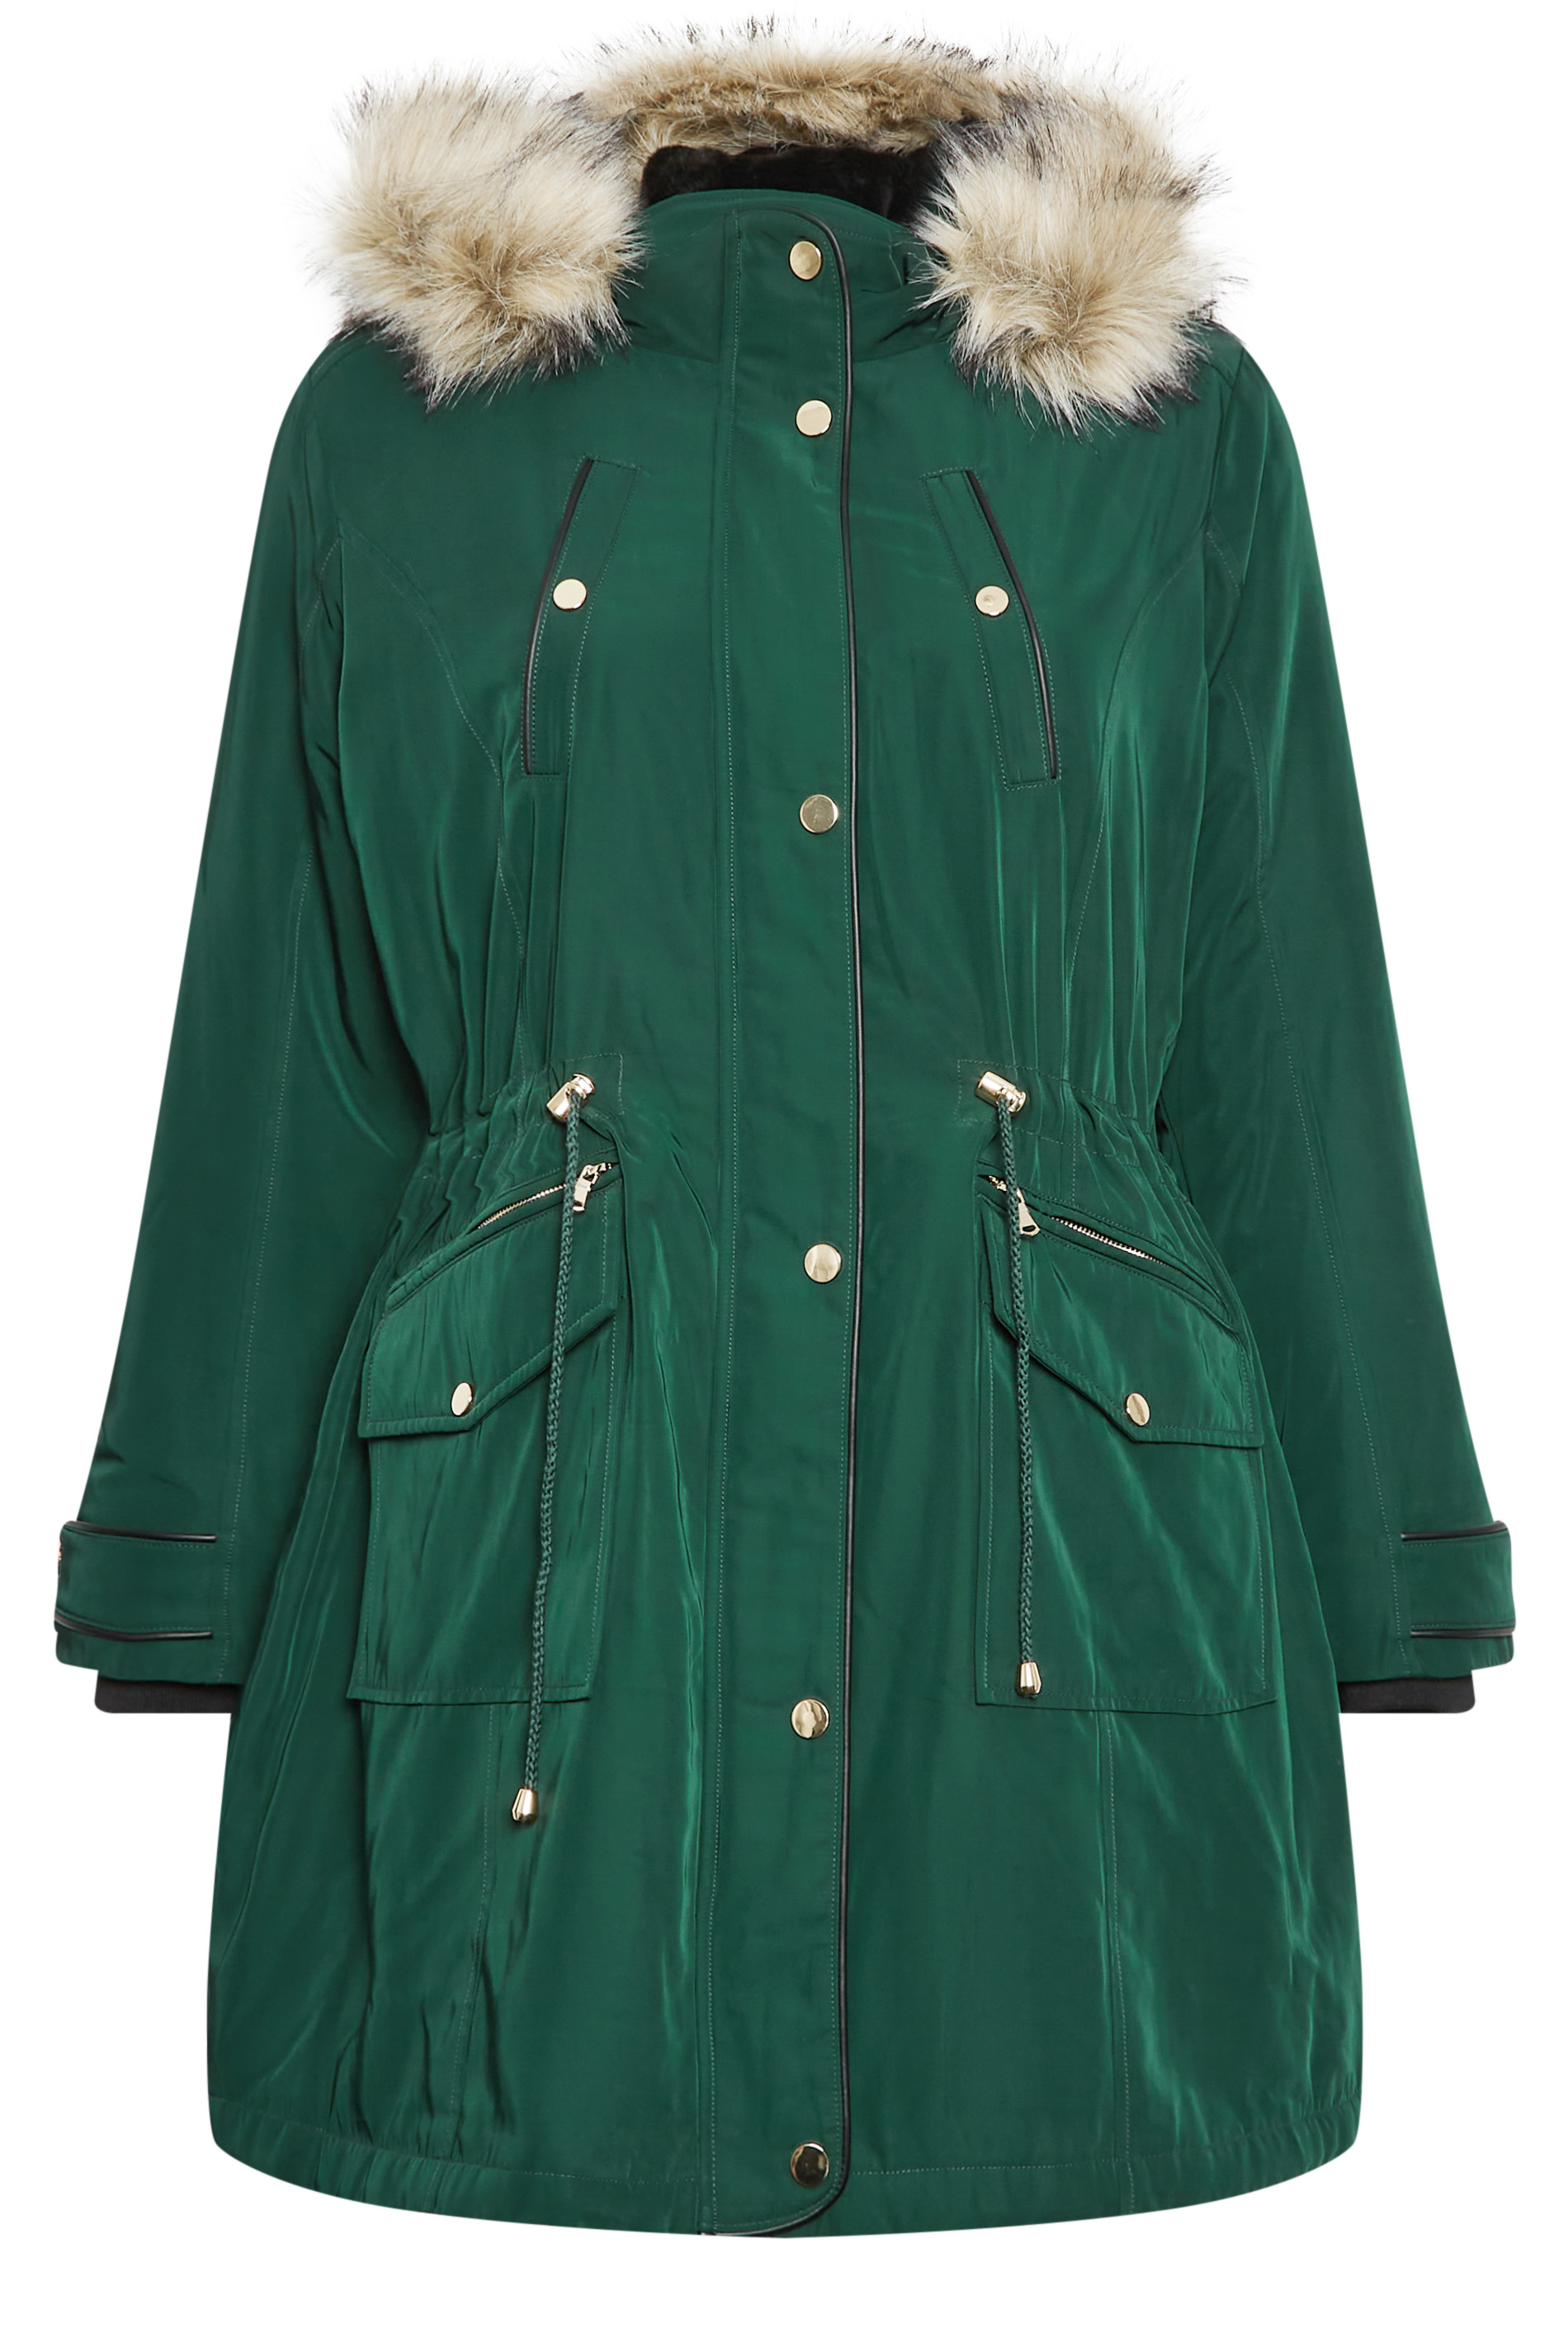 Yours Curve Forest Green Faux Fur Trim Hooded Parka Coat, Women's Curve & Plus Size, Yours